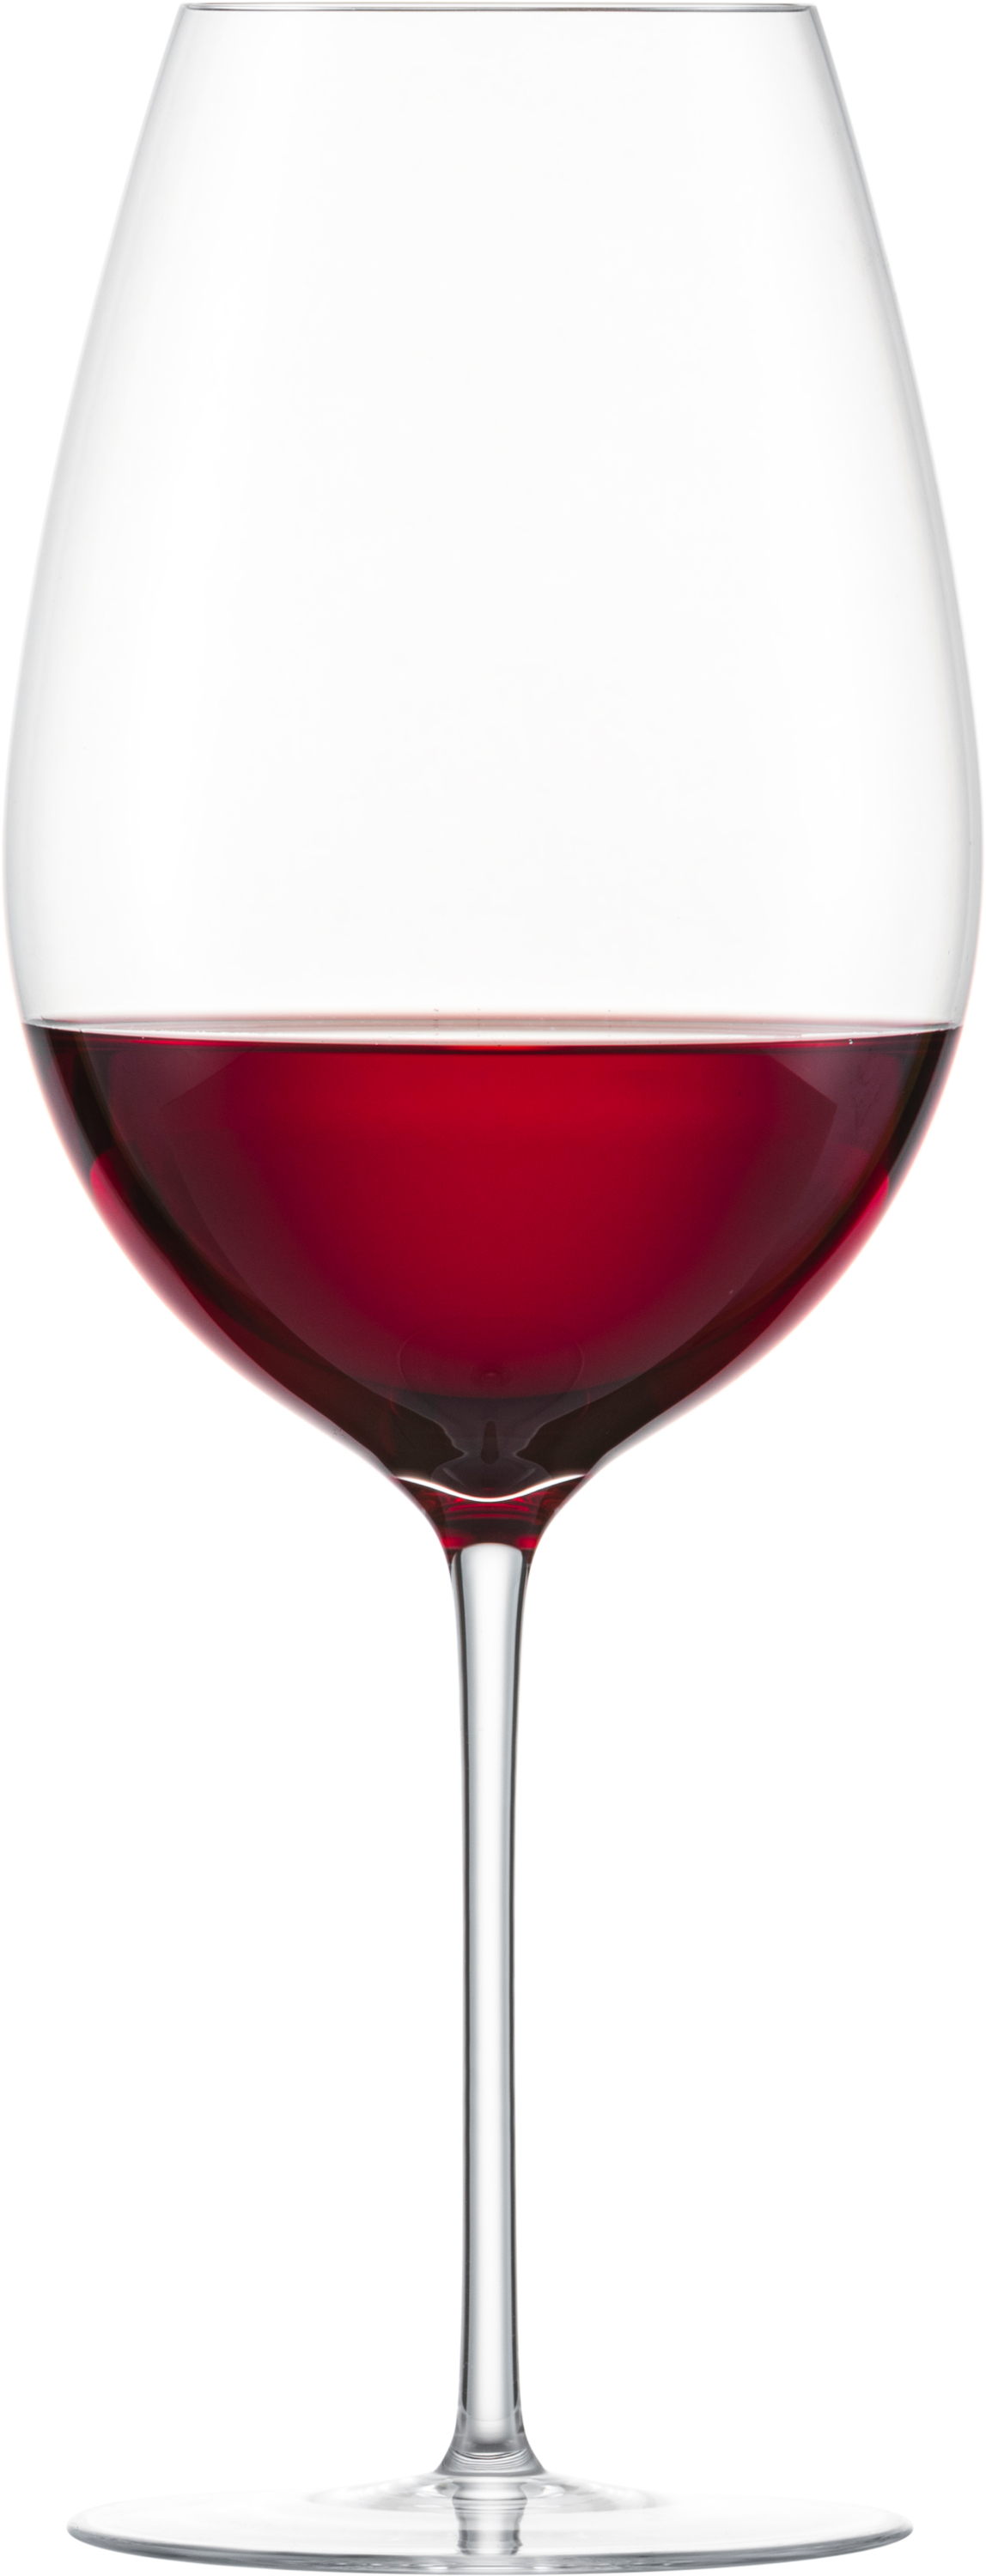 Wein Bordeaux Glas Enoteca spülmaschinenfest,Rotweinglas 